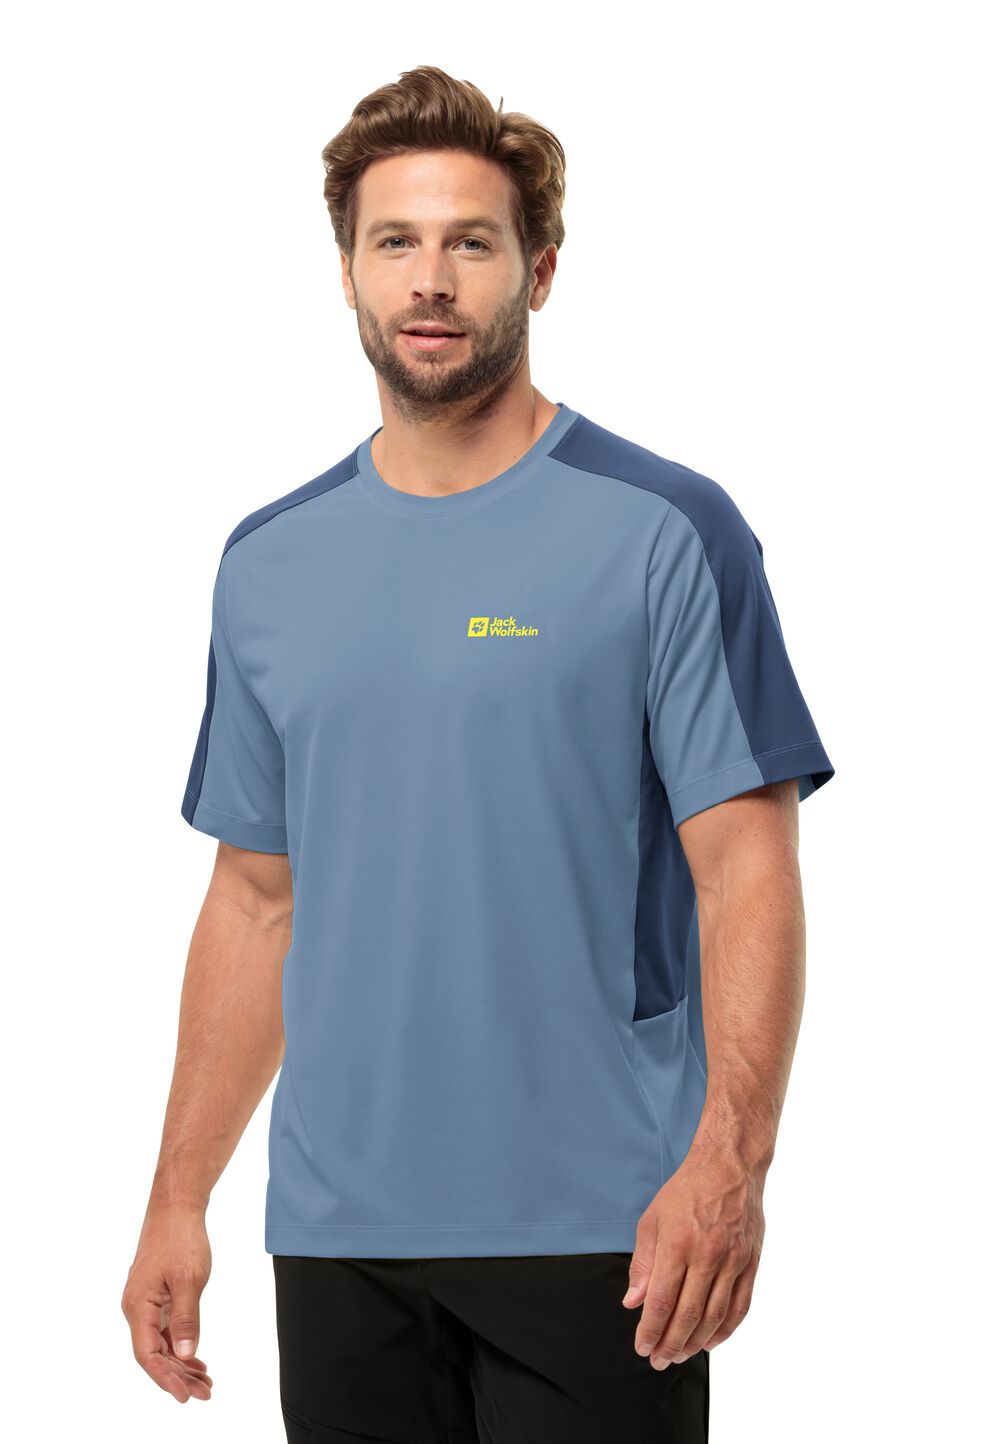 Jack Wolfskin Narrows T-Shirt Men Functioneel shirt Heren XXL elemental blue elemental blue